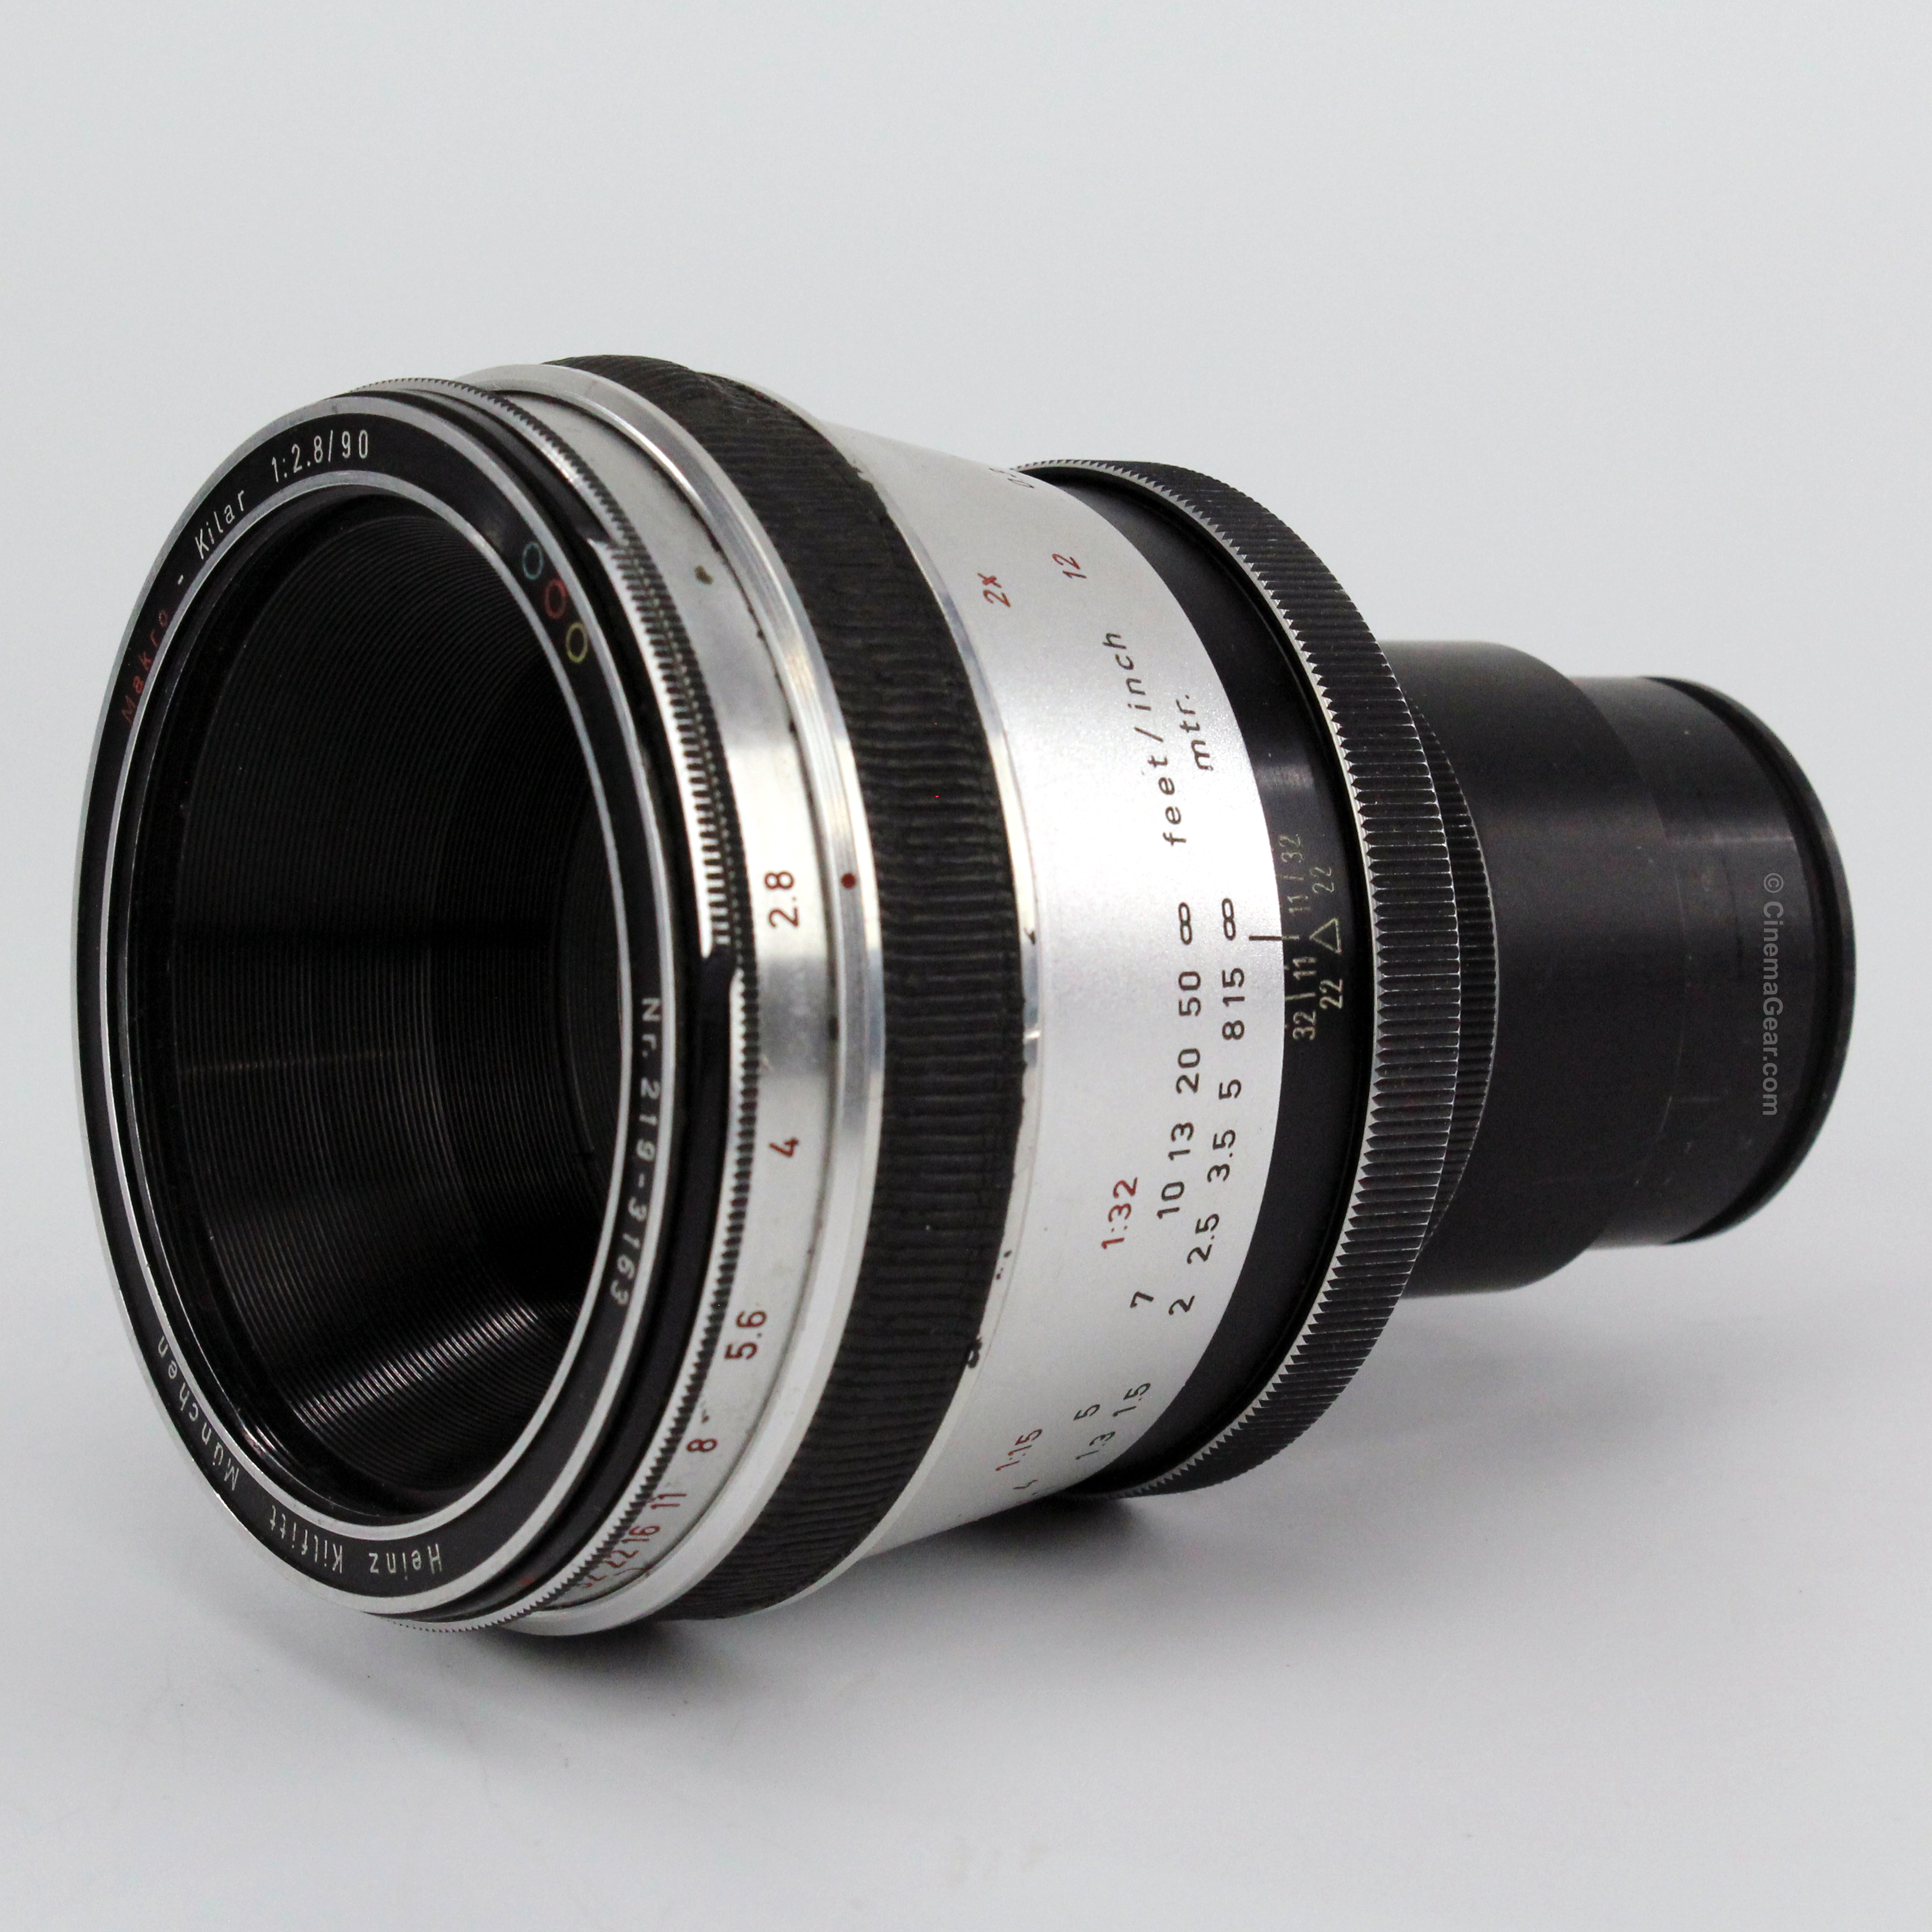 Heinz Kilfitt Munchen Macro Kilar 8-90mm T2.8 lens in Mitchell Standard mount